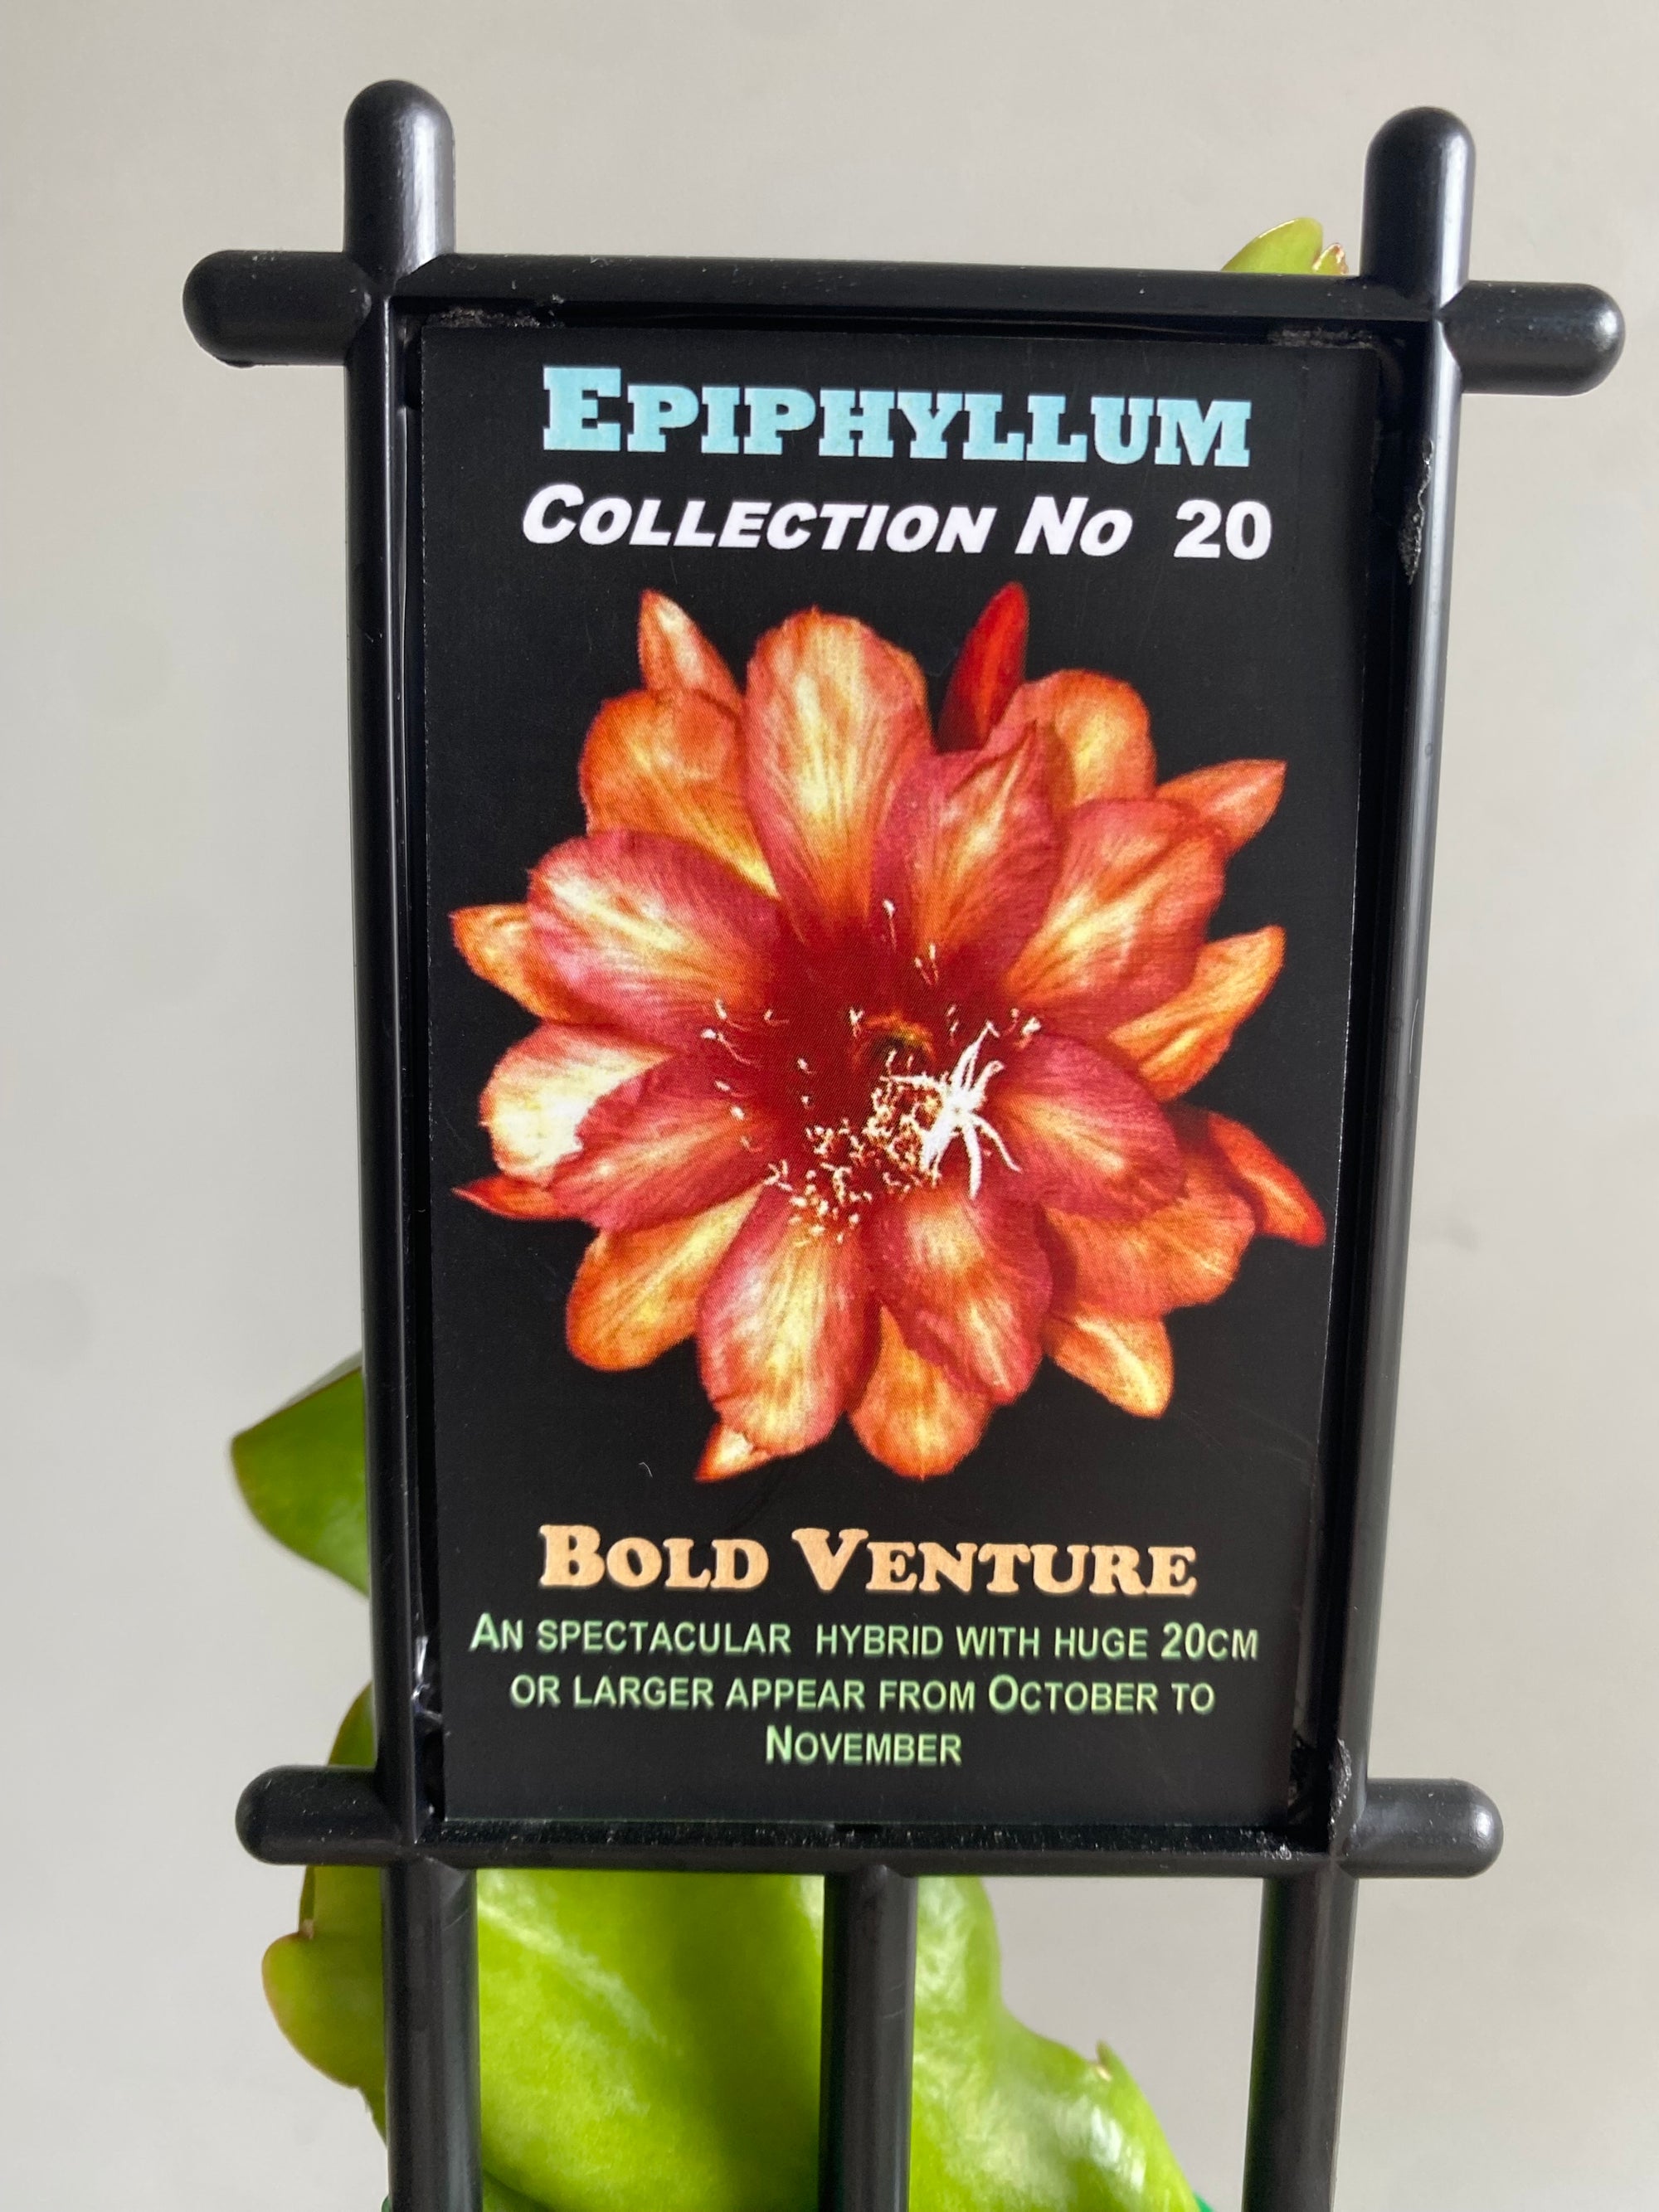 Epiphyllum 'Bold Venture' - Collection No. 20